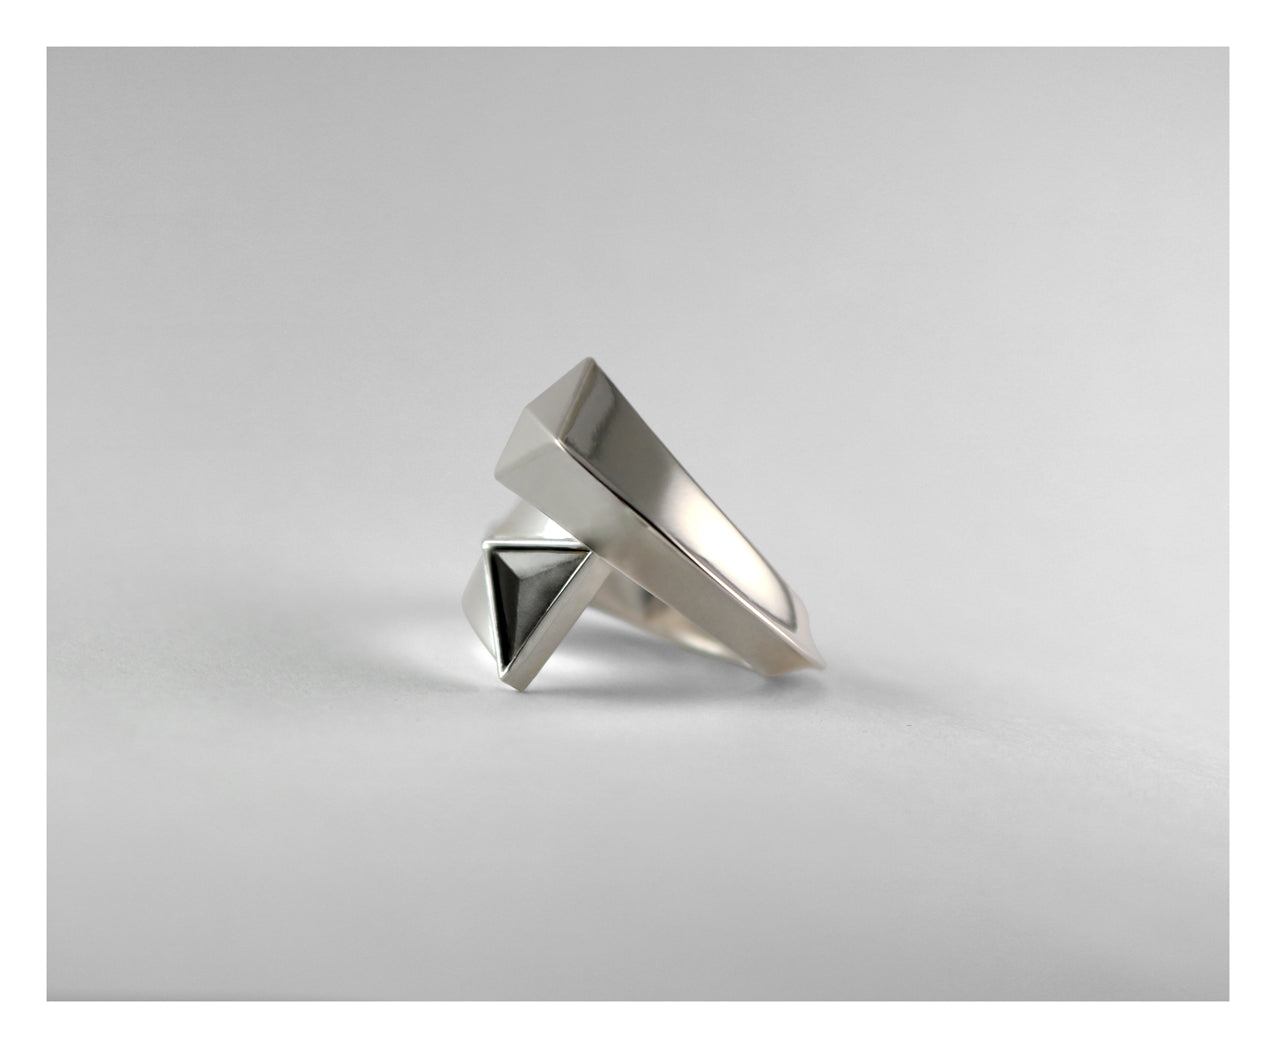 Artemis Sterling Silver Ring